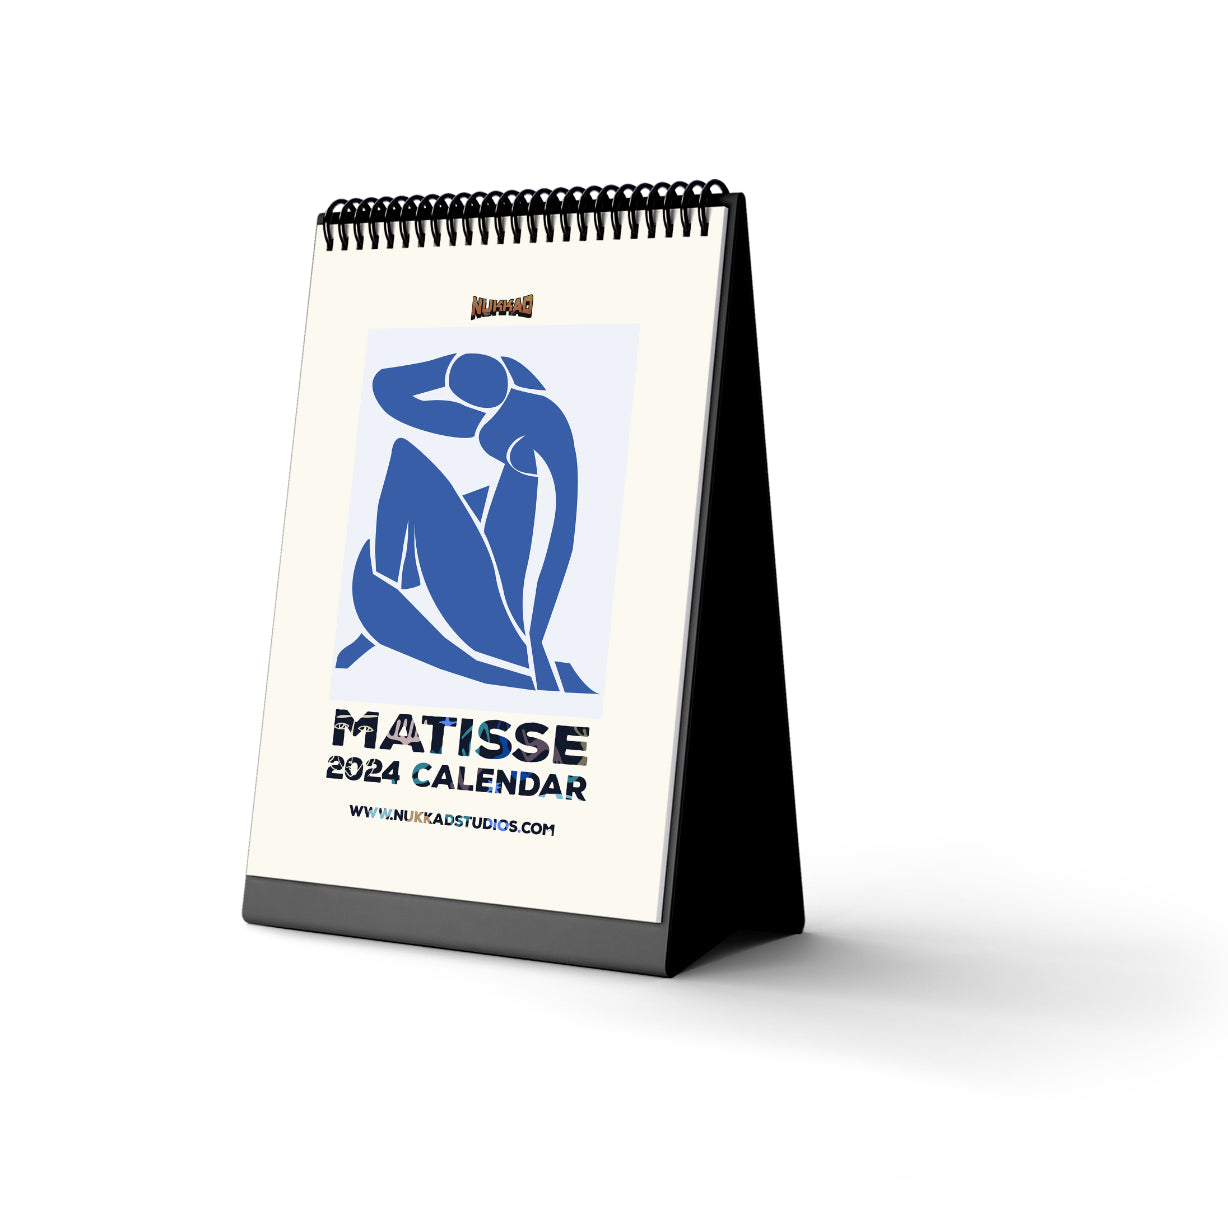 Henri Matisse Calendar 2024 - Nukkad Studios